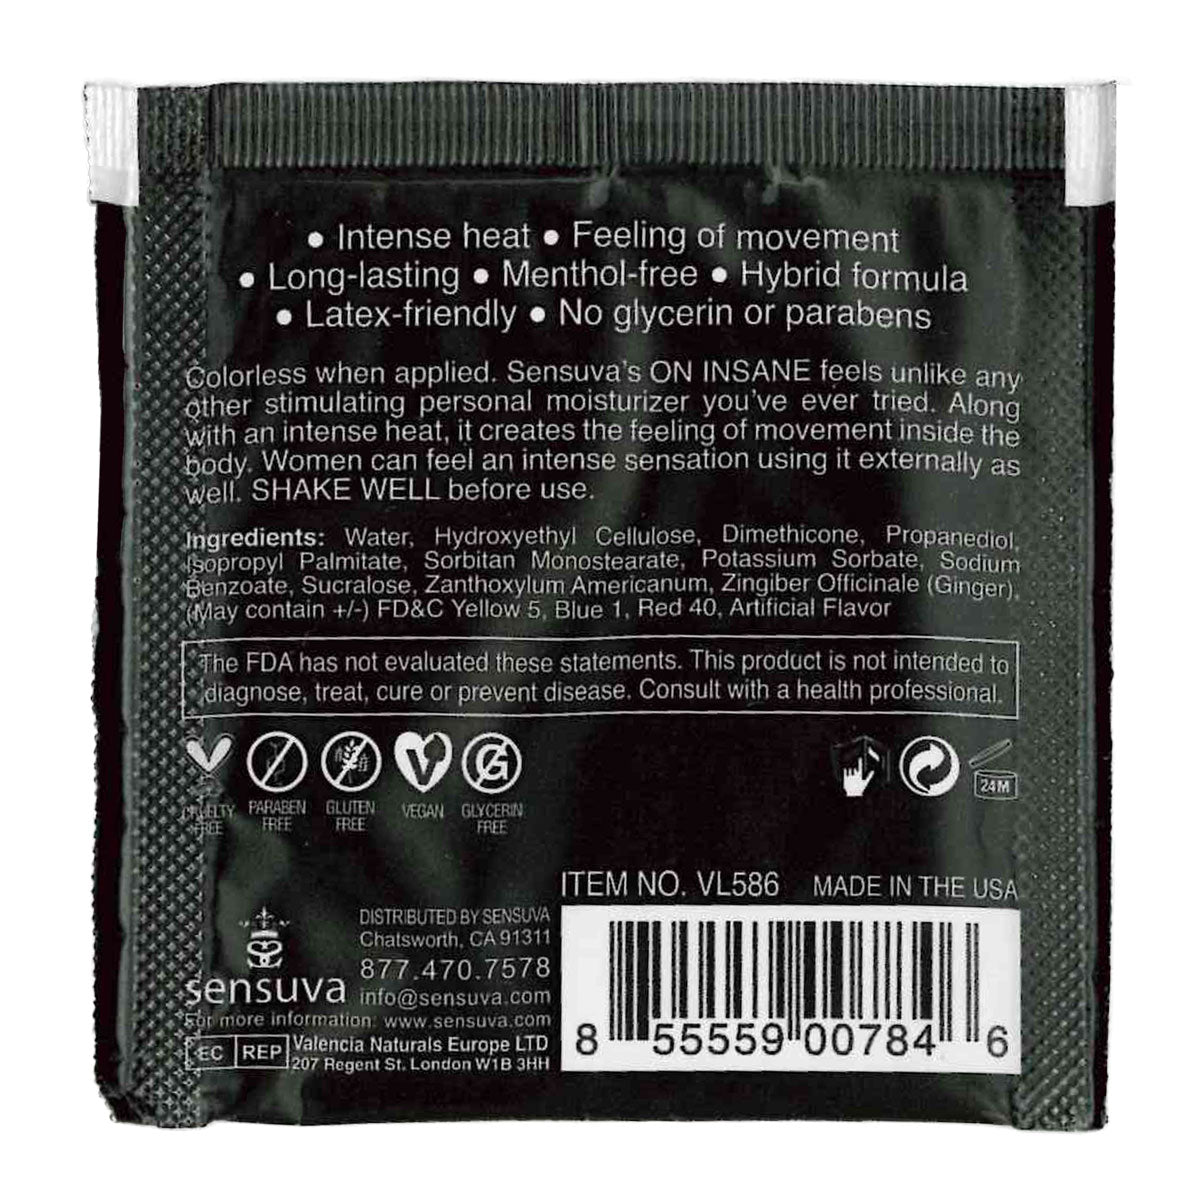 Sensuva – Ultra-Stimulating ON INSANE - Caramel Apple - Foil 6ml/0.20 fl oz.